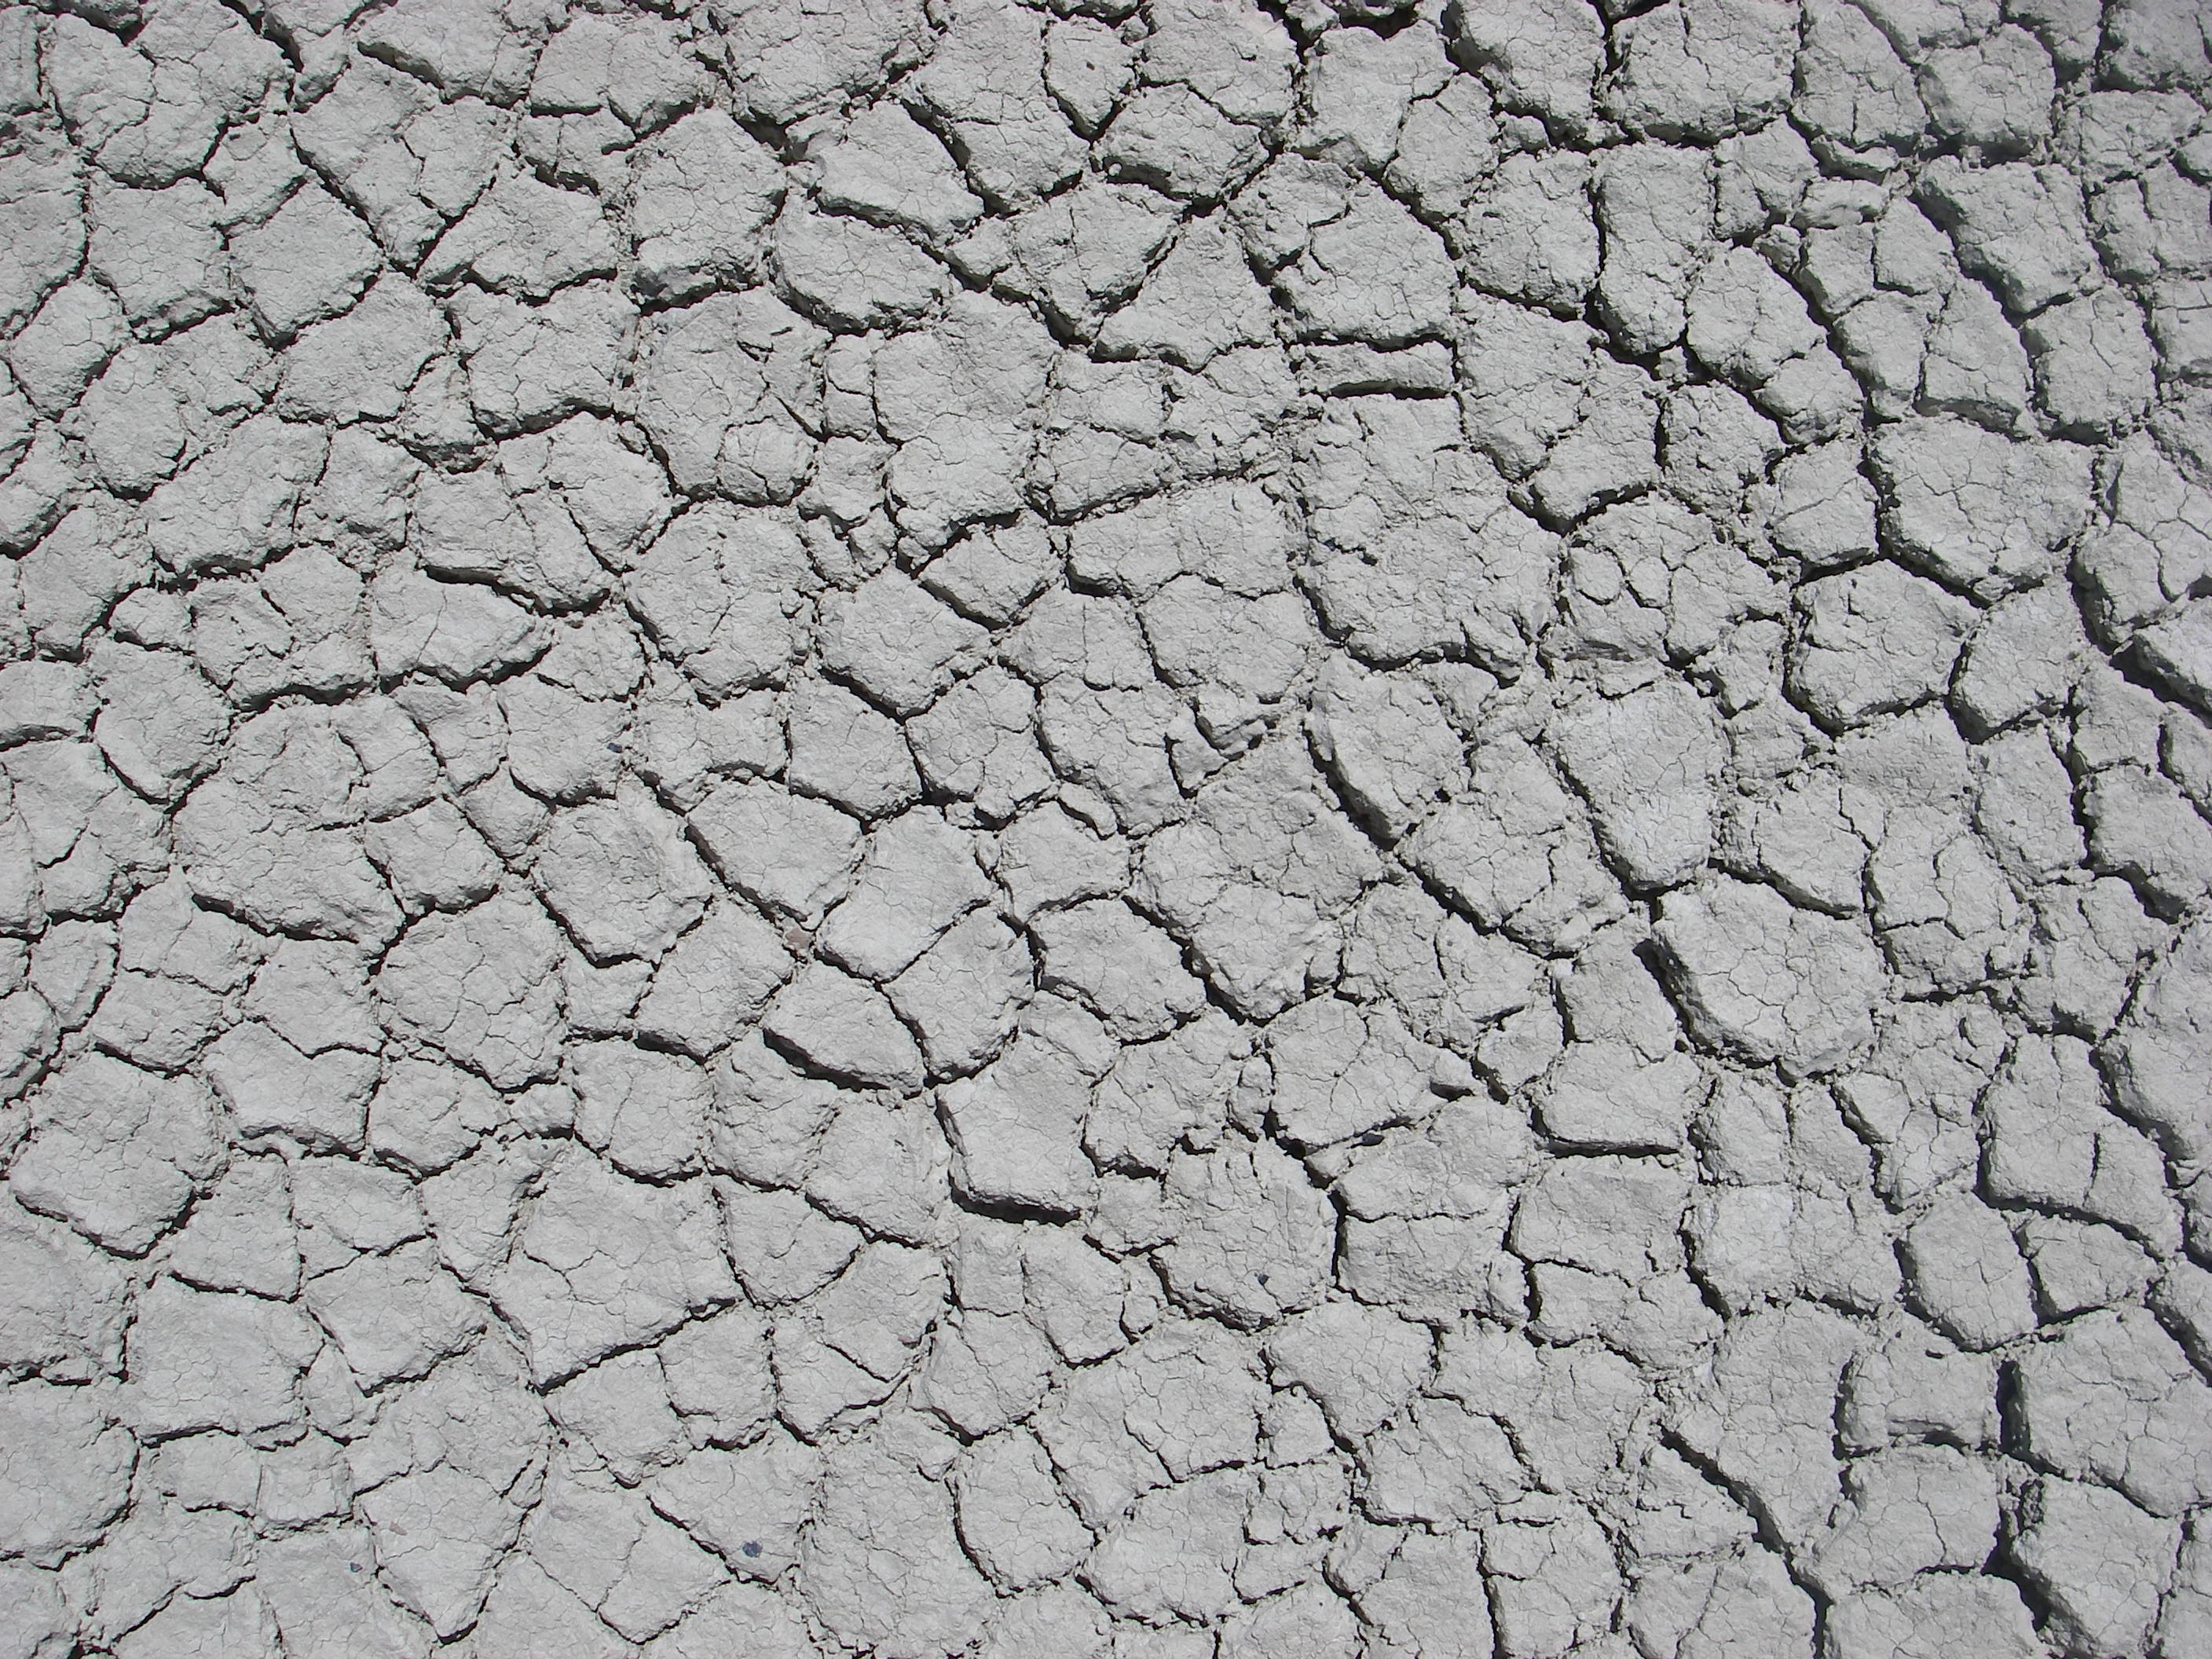 File:Cracked mud in Black Rock desert.JPG - Wikimedia Commons